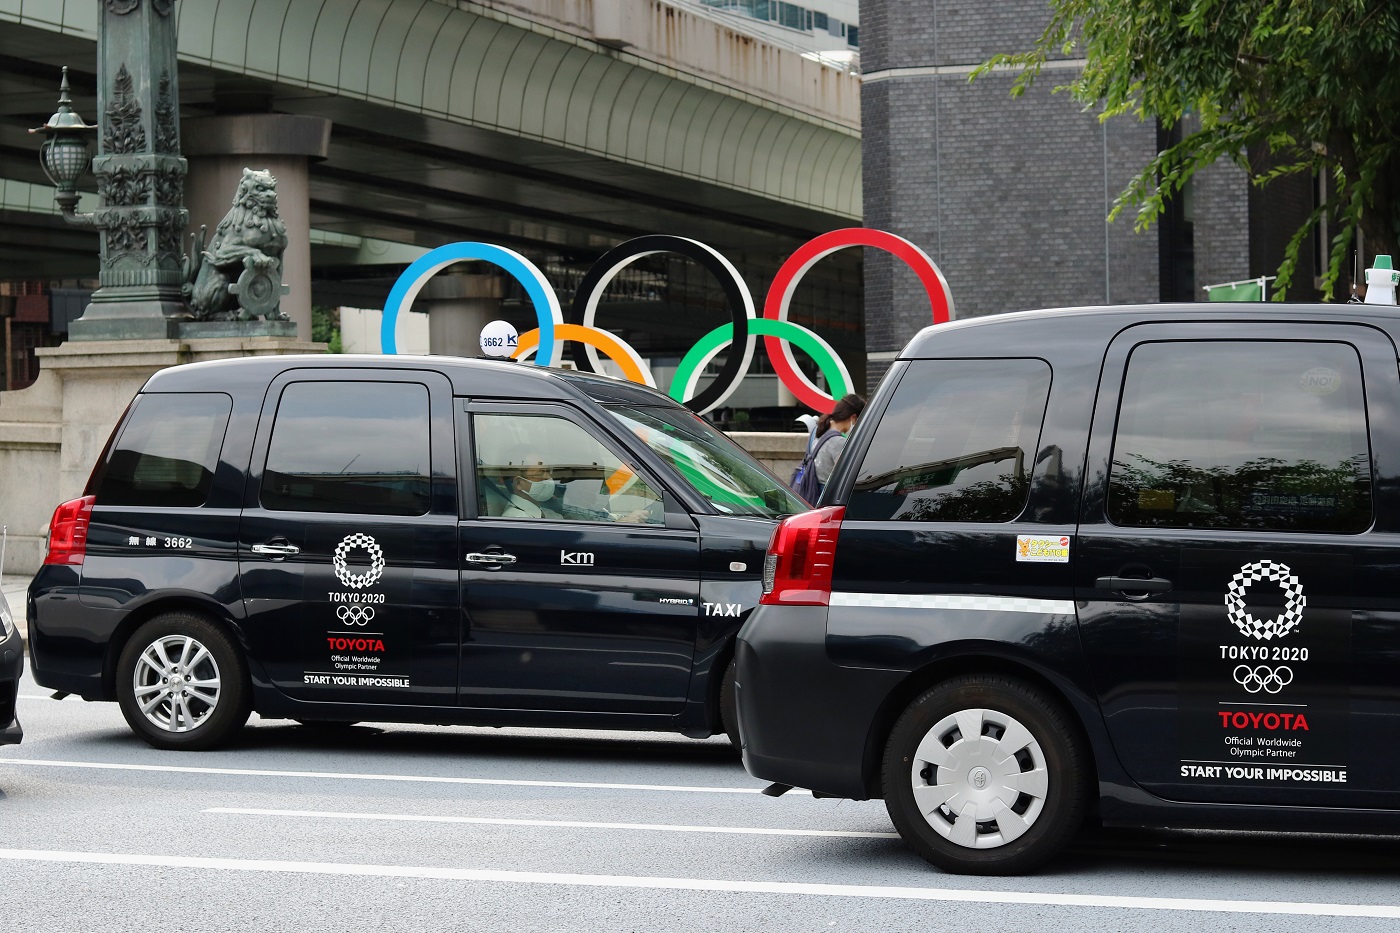 shutterstock_toyota taxi olympic โอลิมปิก